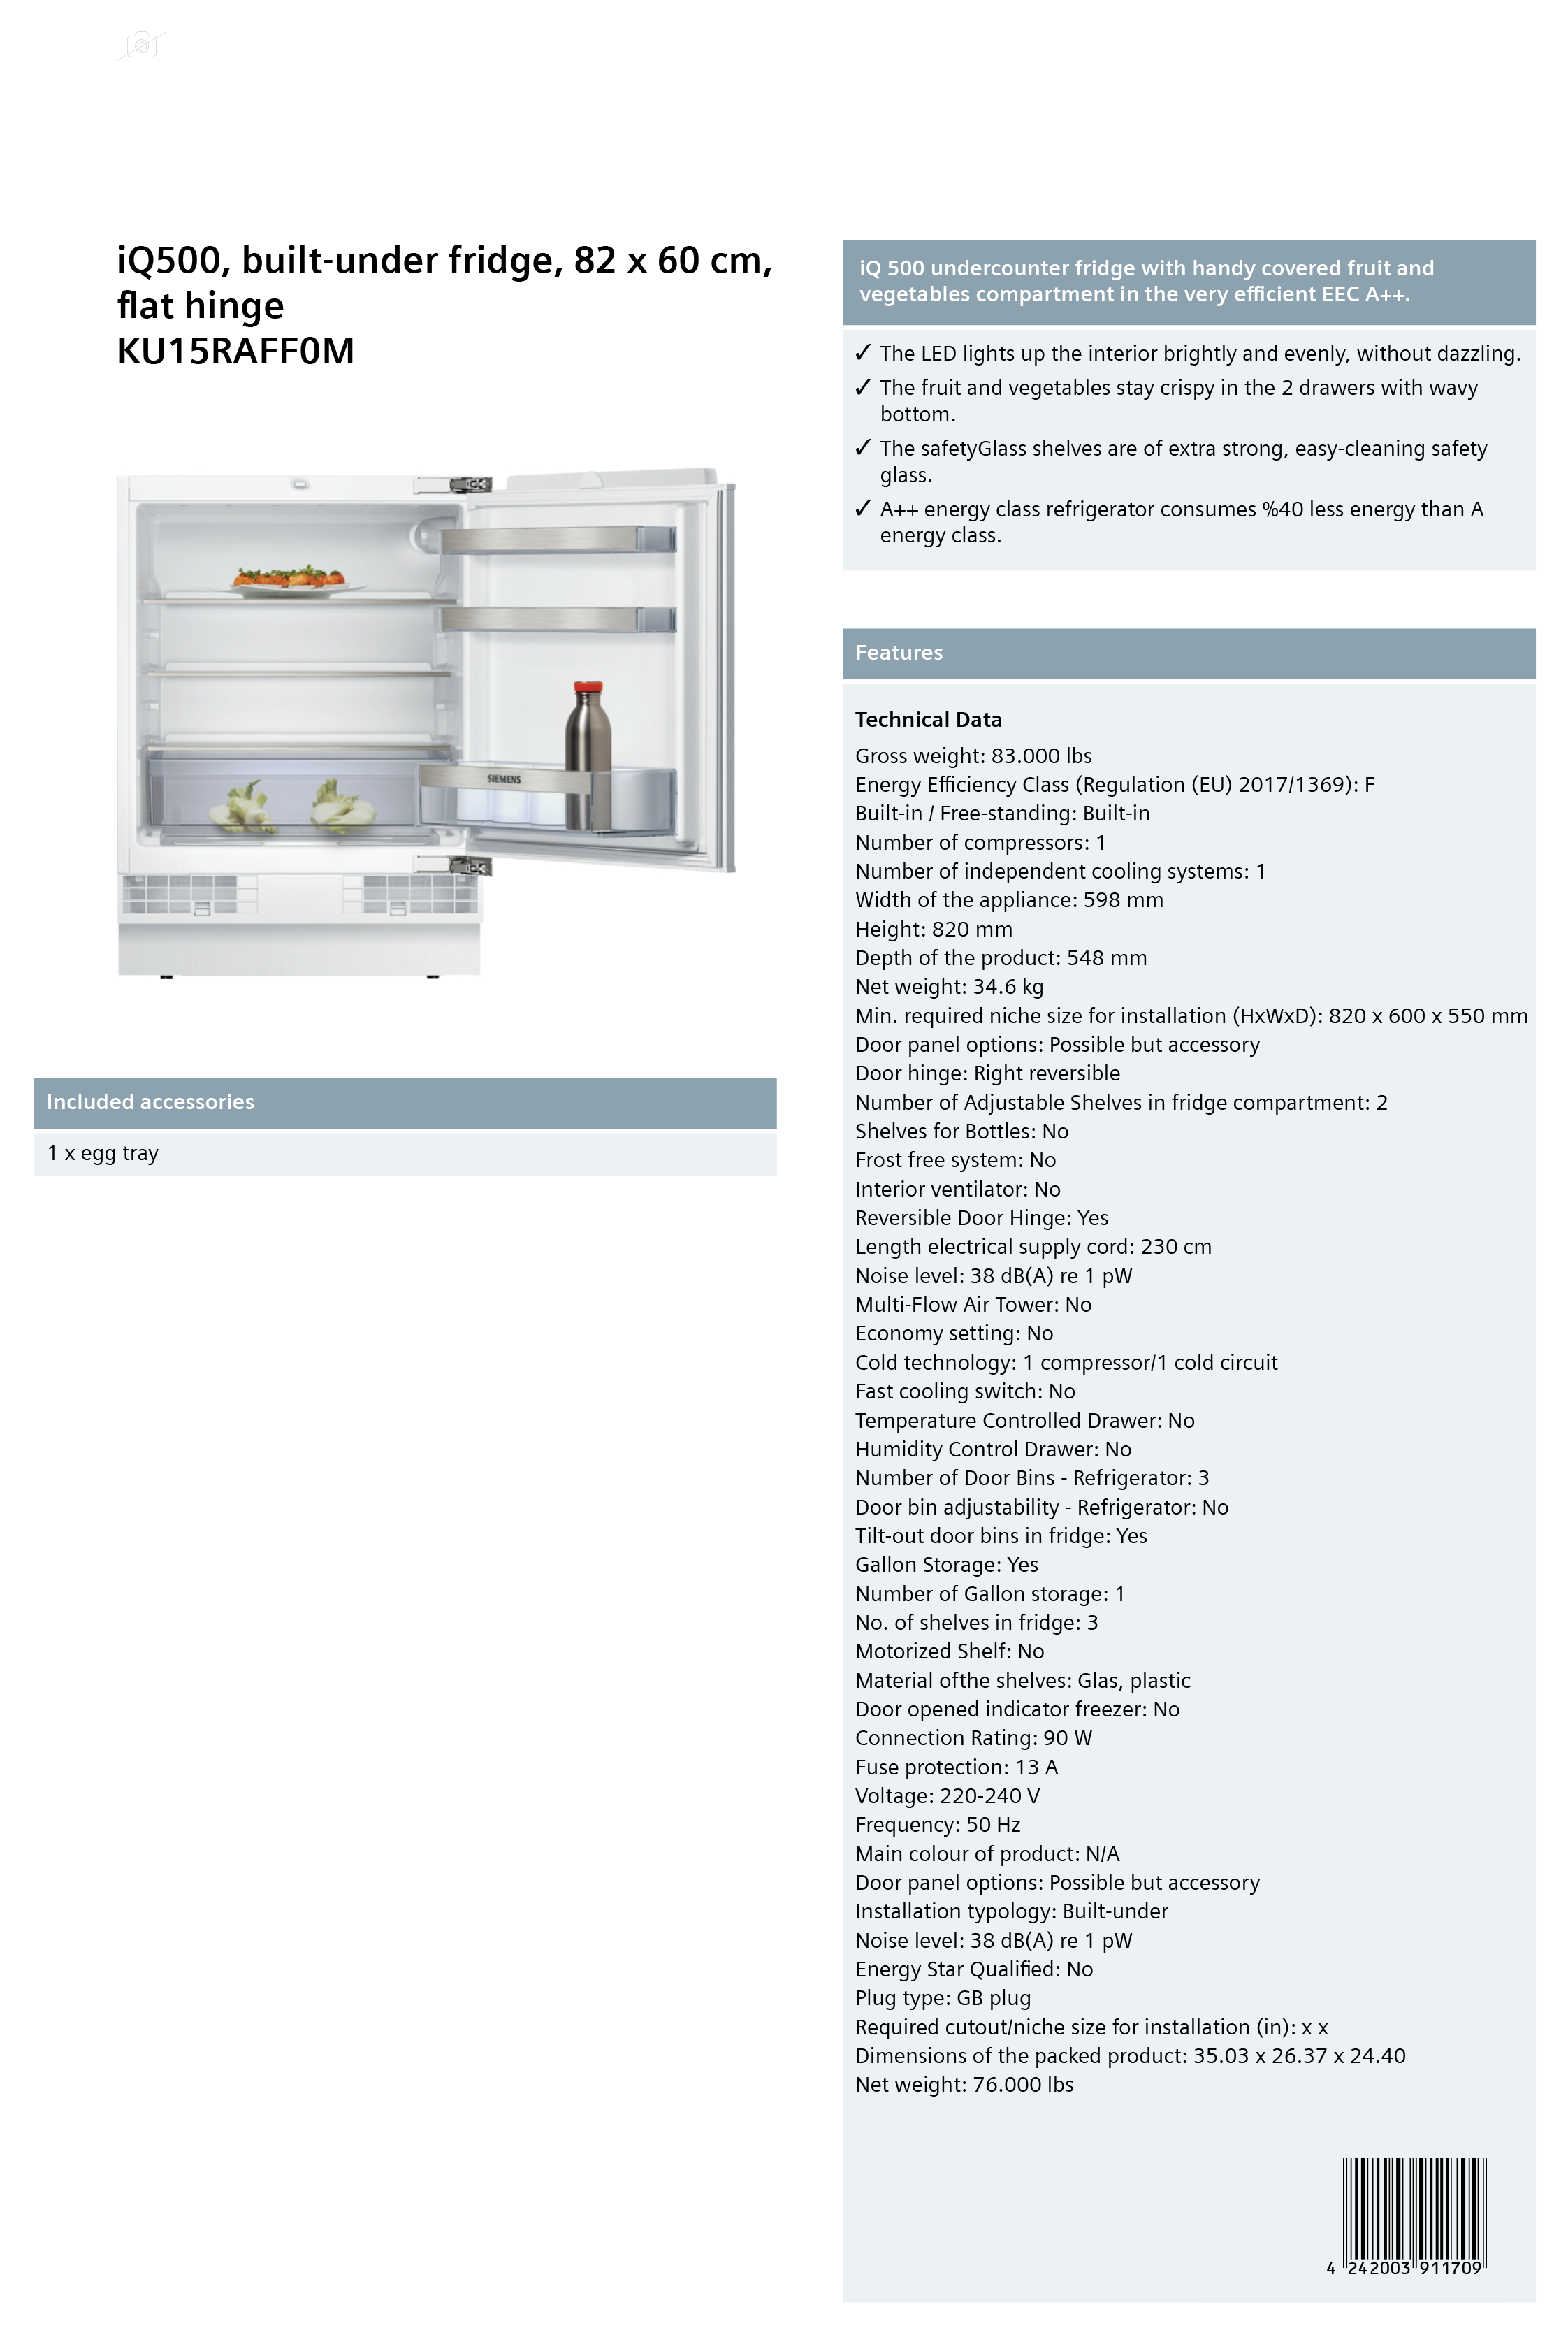 Siemens KU15RAFFOM | under counter refrigerator
